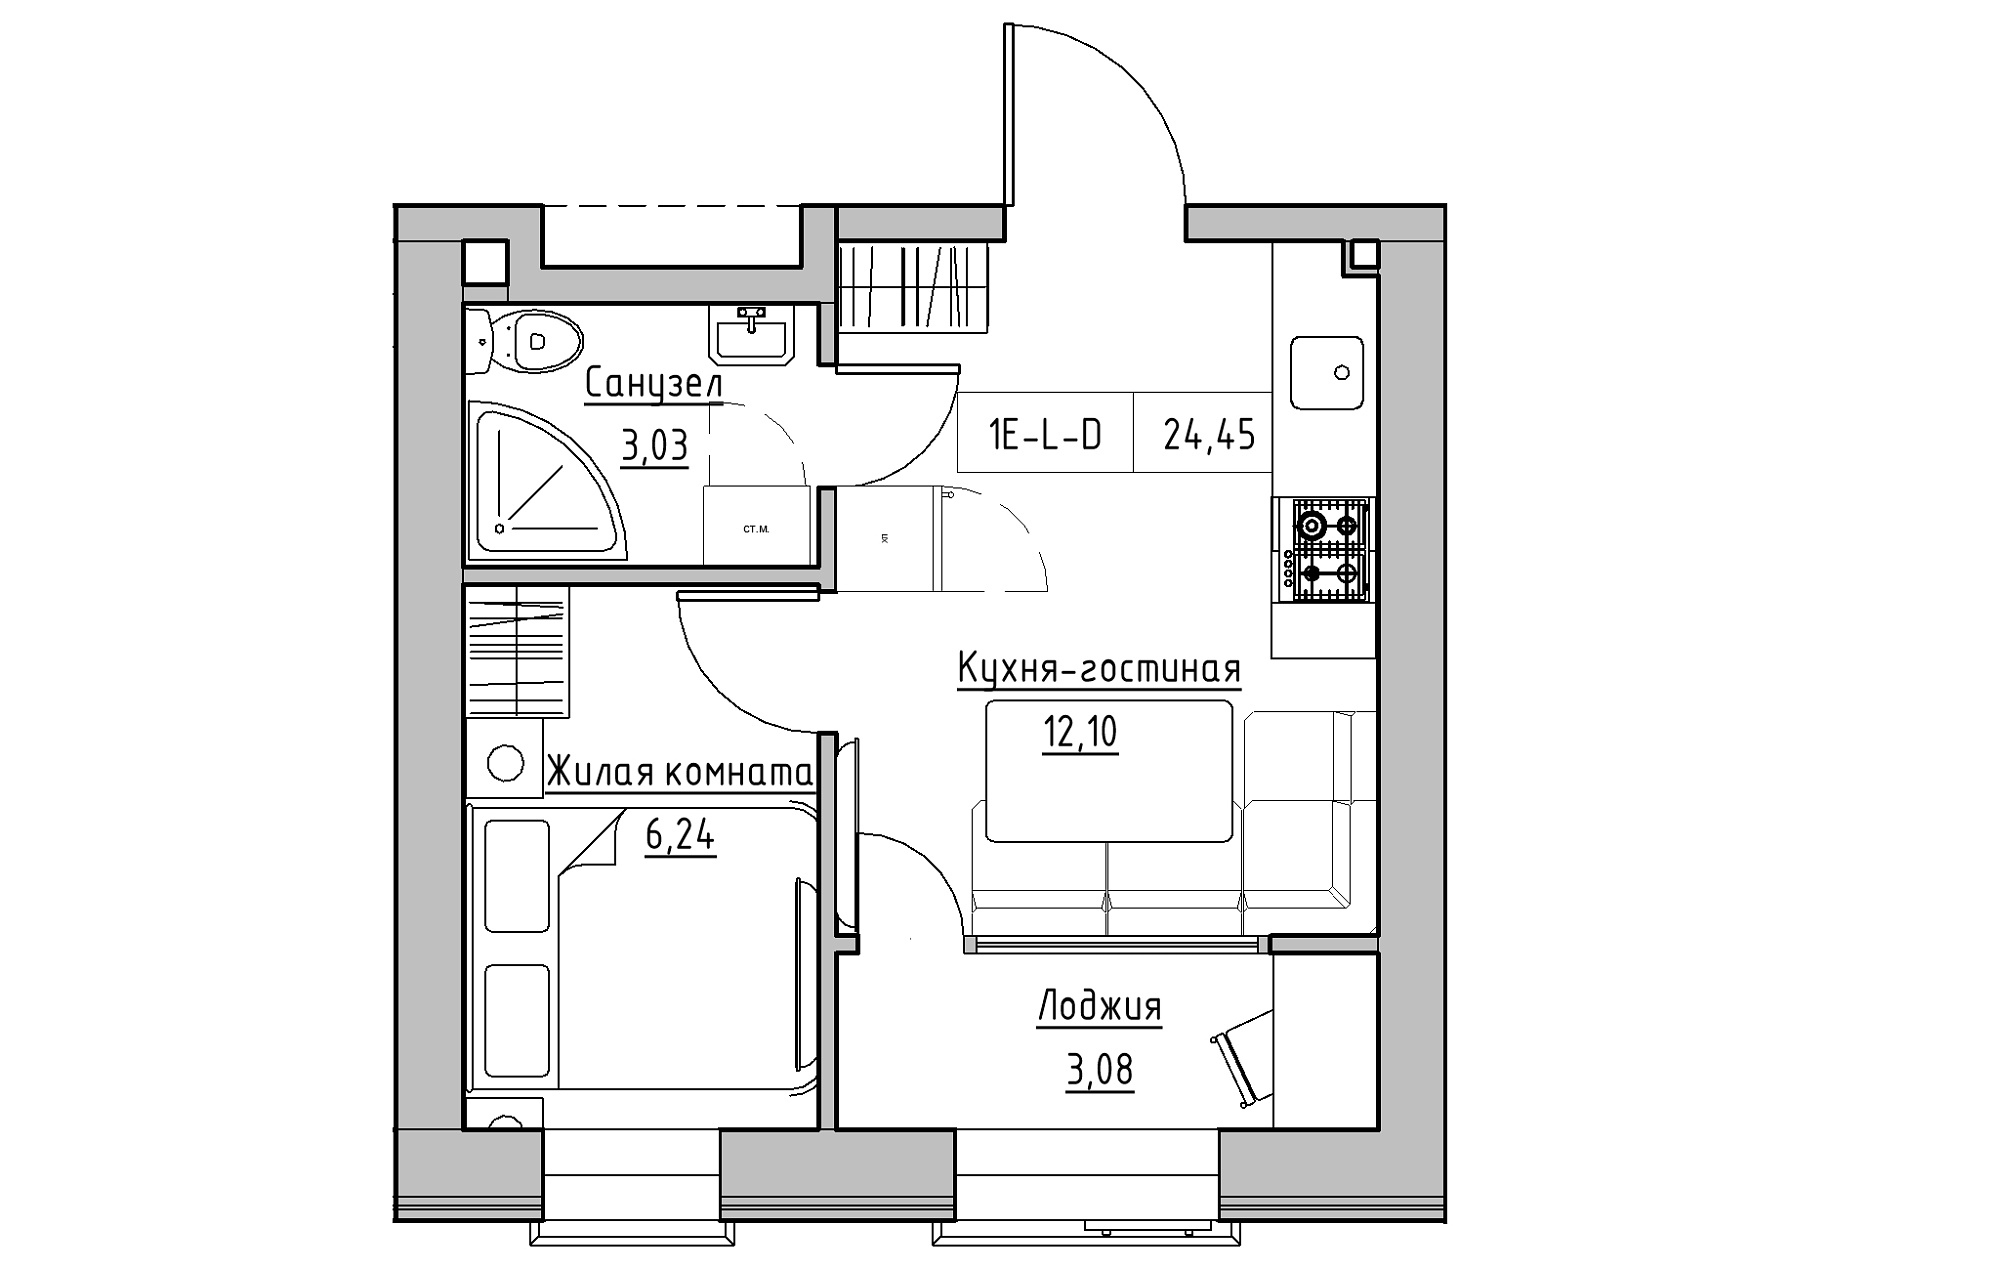 Planning 1-rm flats area 24.45m2, KS-018-01/0002.